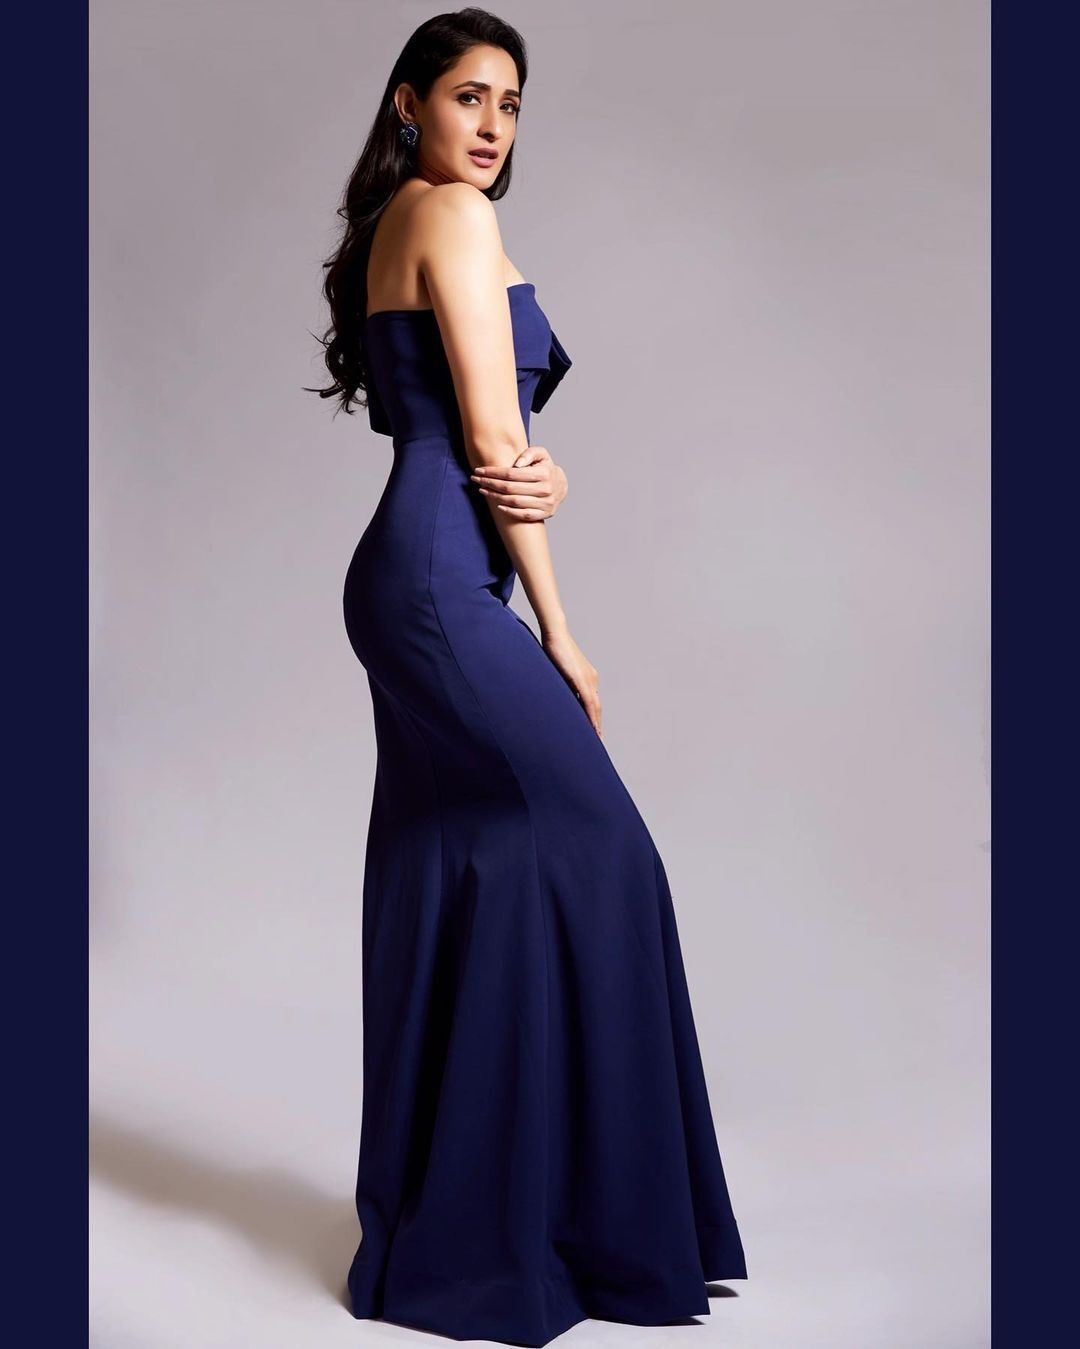 Pragya Jaiswal New Clicks In Blue Dress